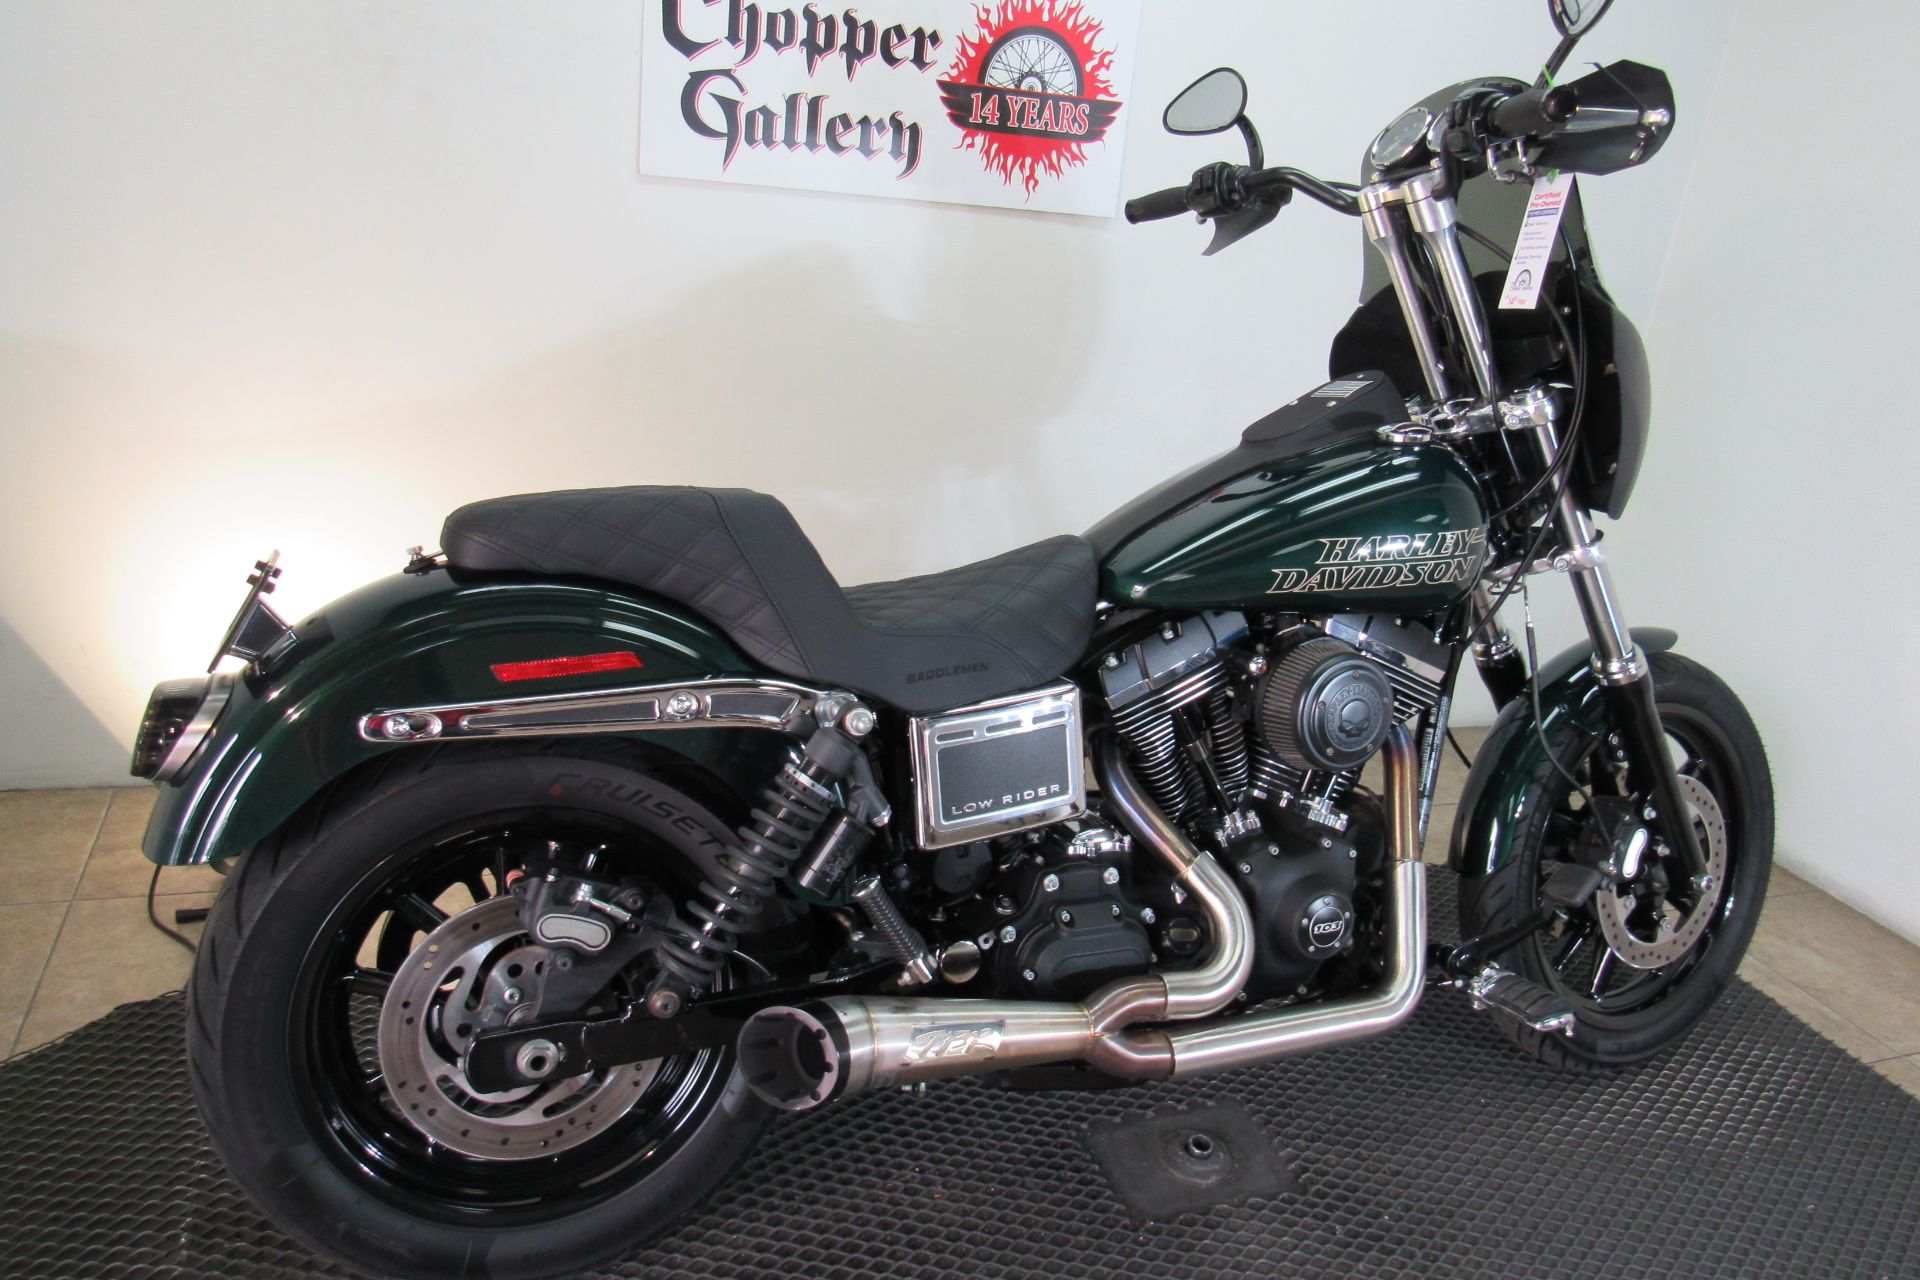 2015 Harley-Davidson Low Rider® in Temecula, California - Photo 3